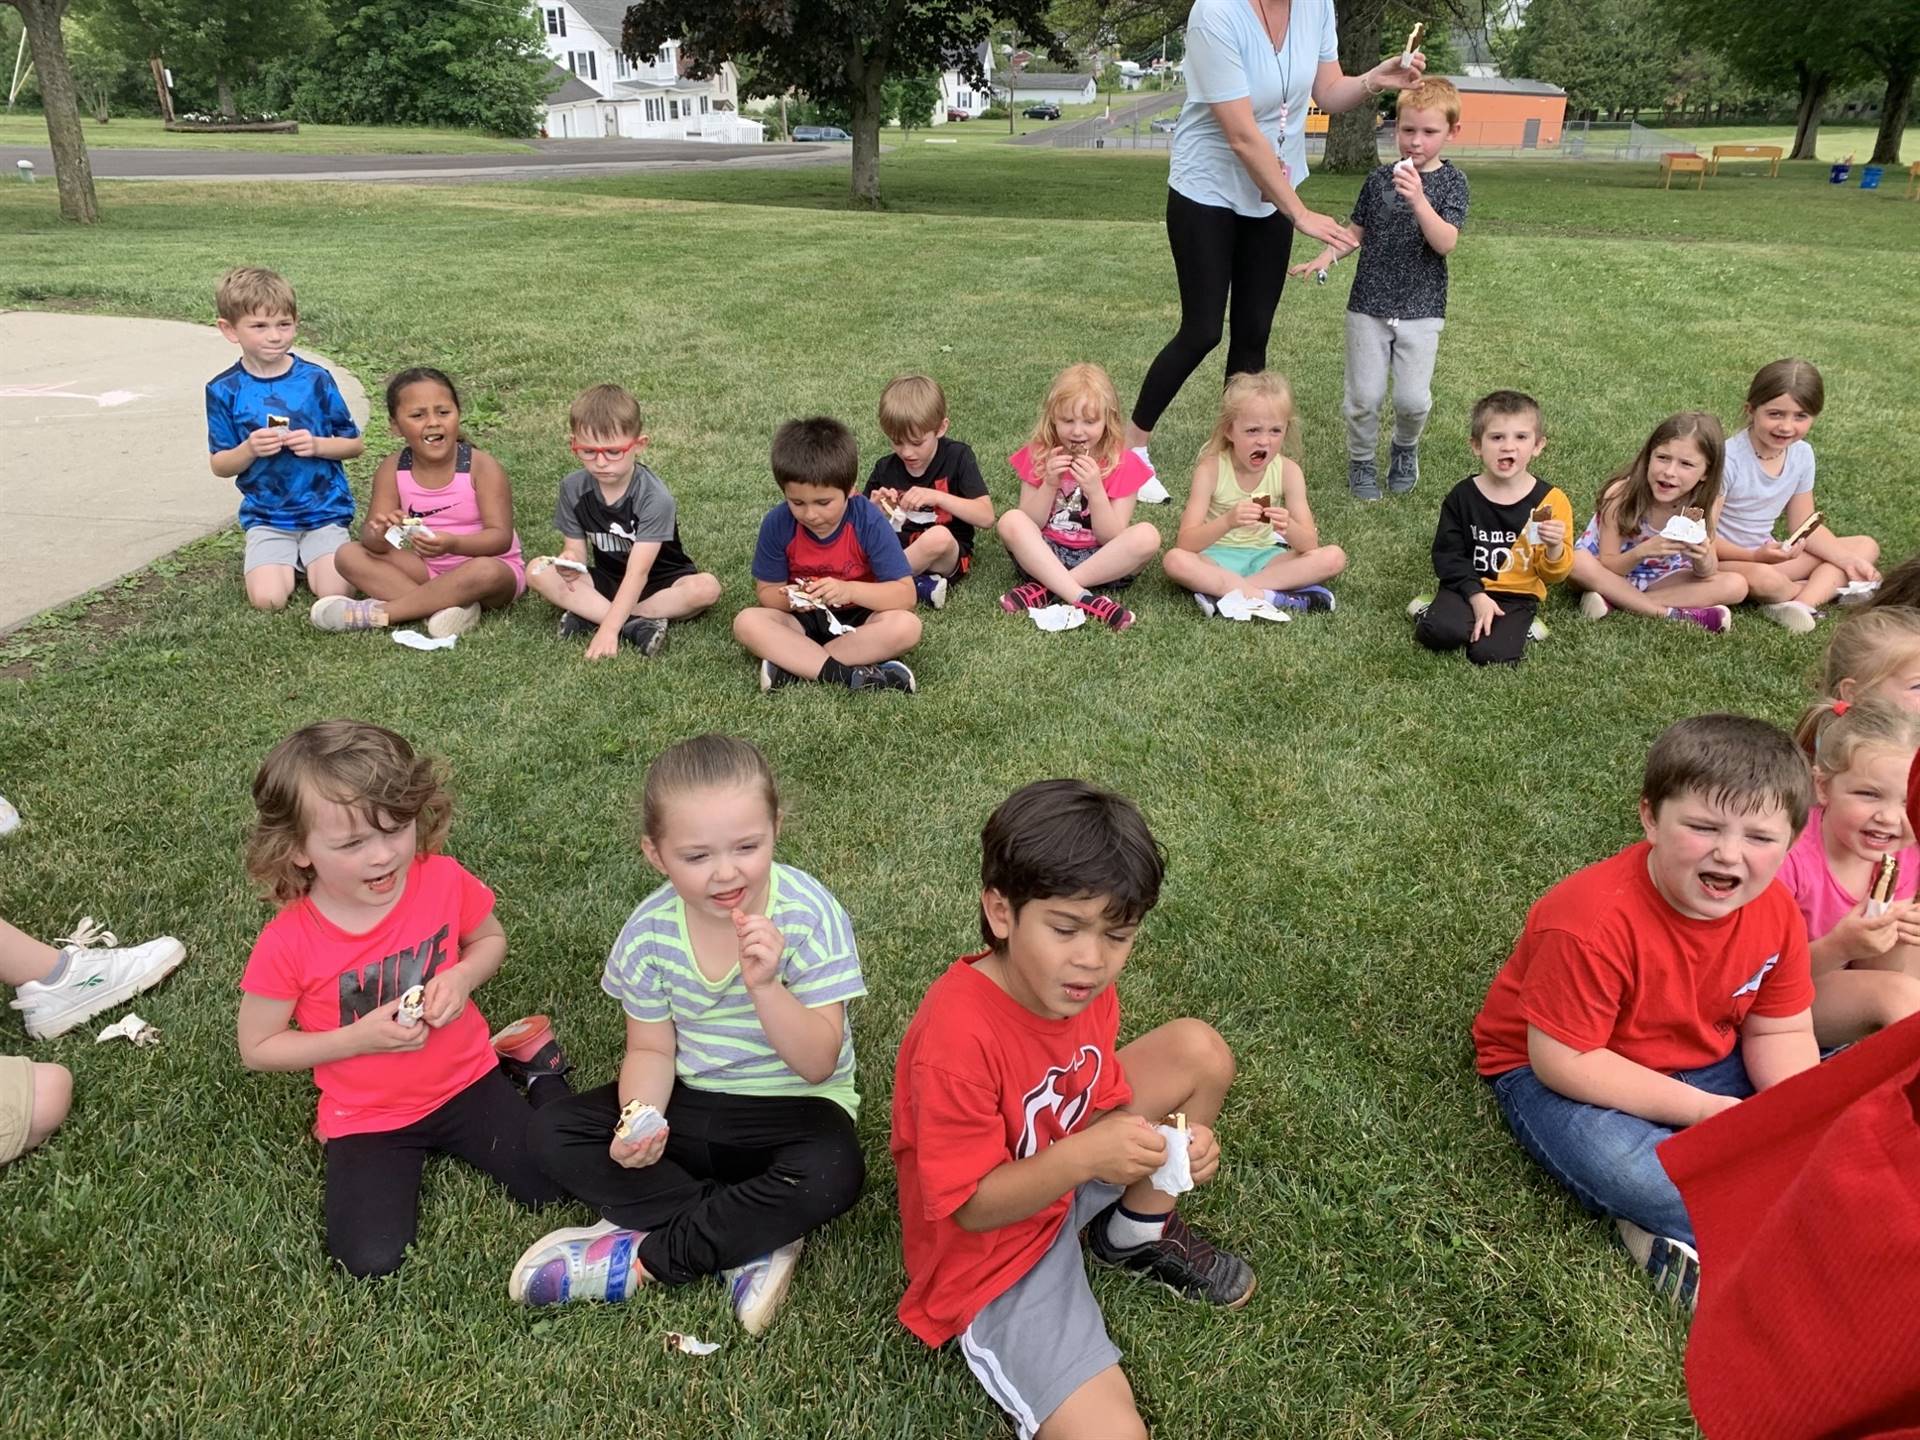 Children sitting on grass eating an ice cream treat